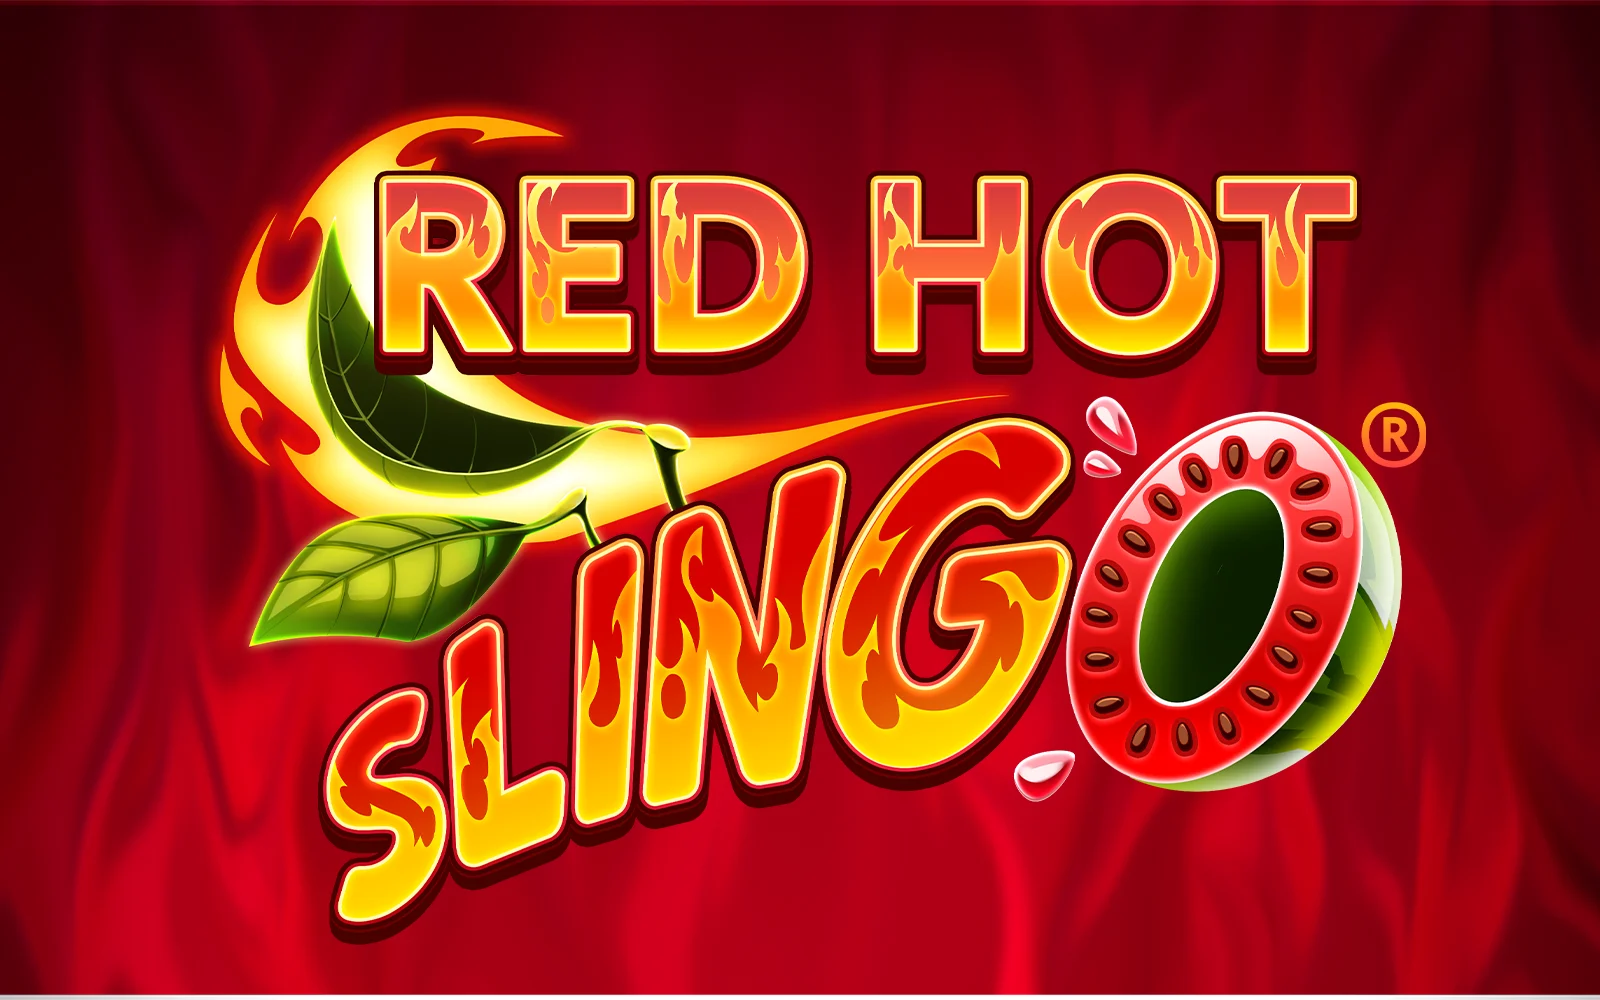 Joacă Red Hot Slingo în cazinoul online Starcasino.be